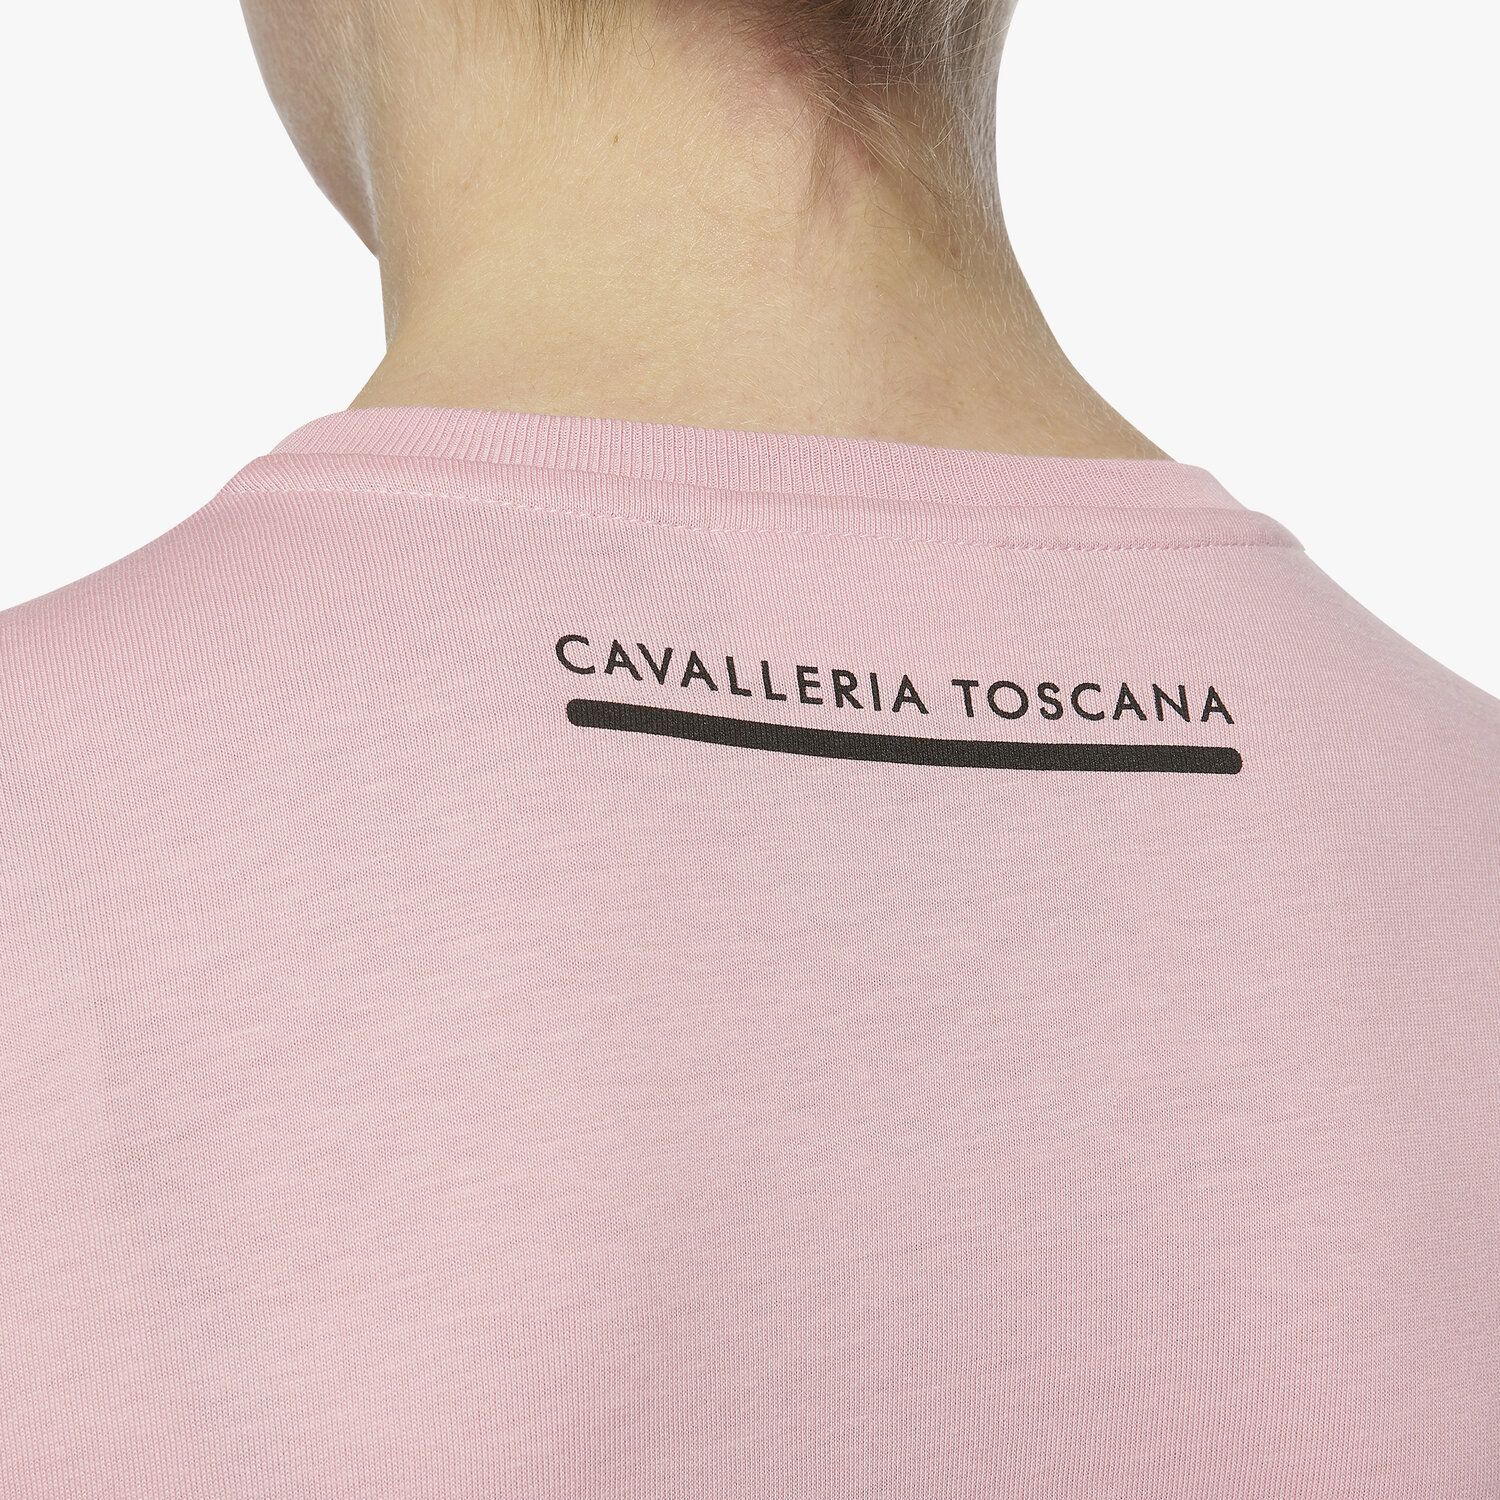 Cavalleria Toscana Girls Love Horses Cotton T-Shirt PINK-4